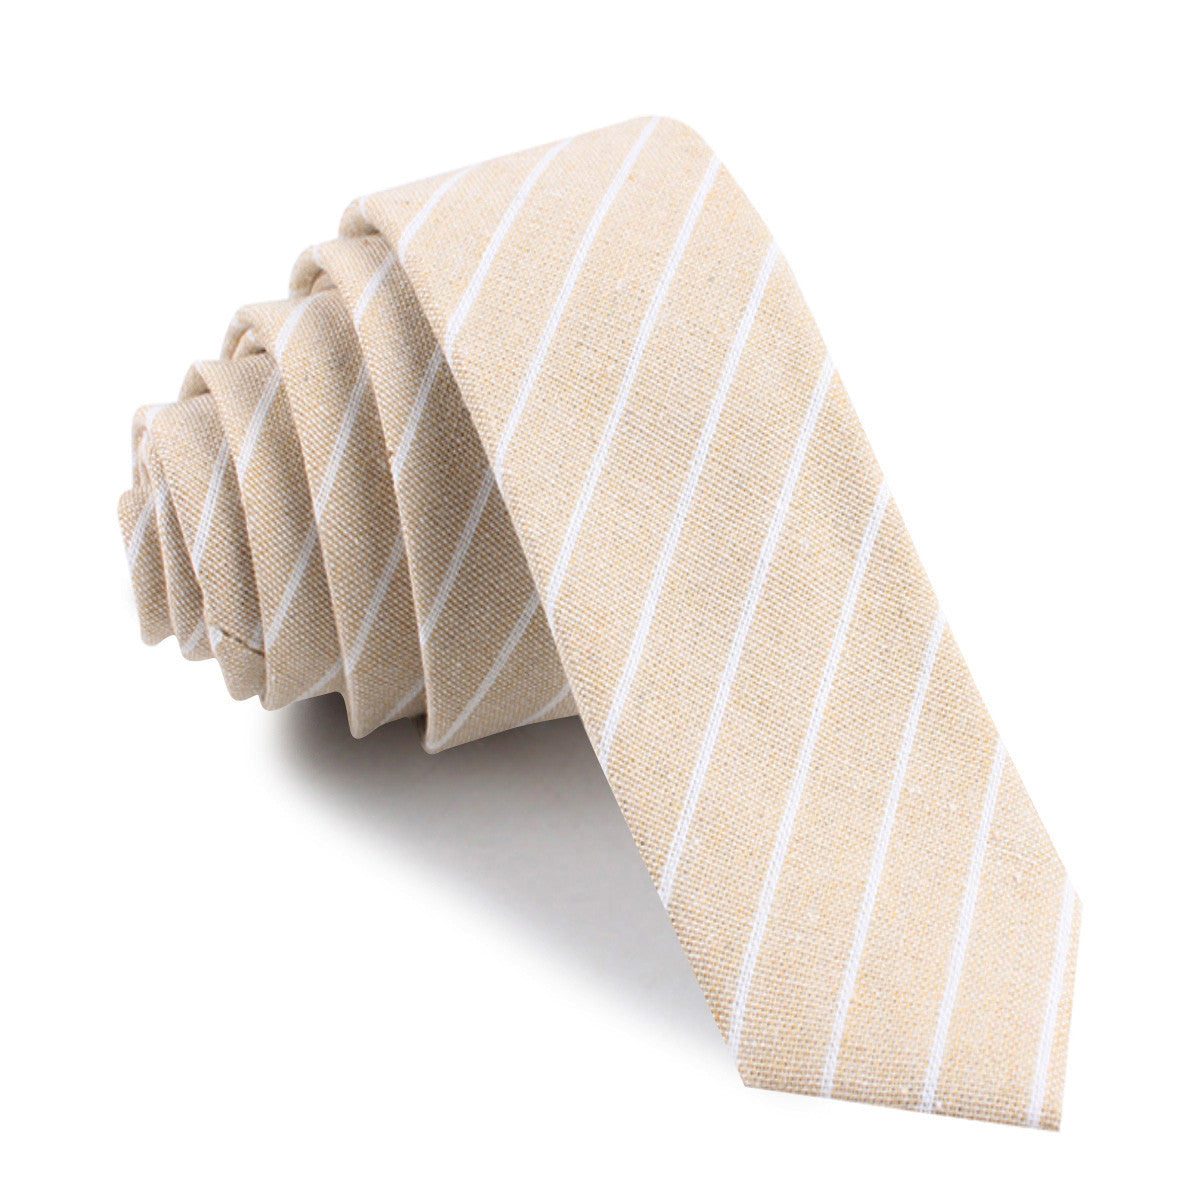 Khaki Linen Pinstripe Skinny Tie